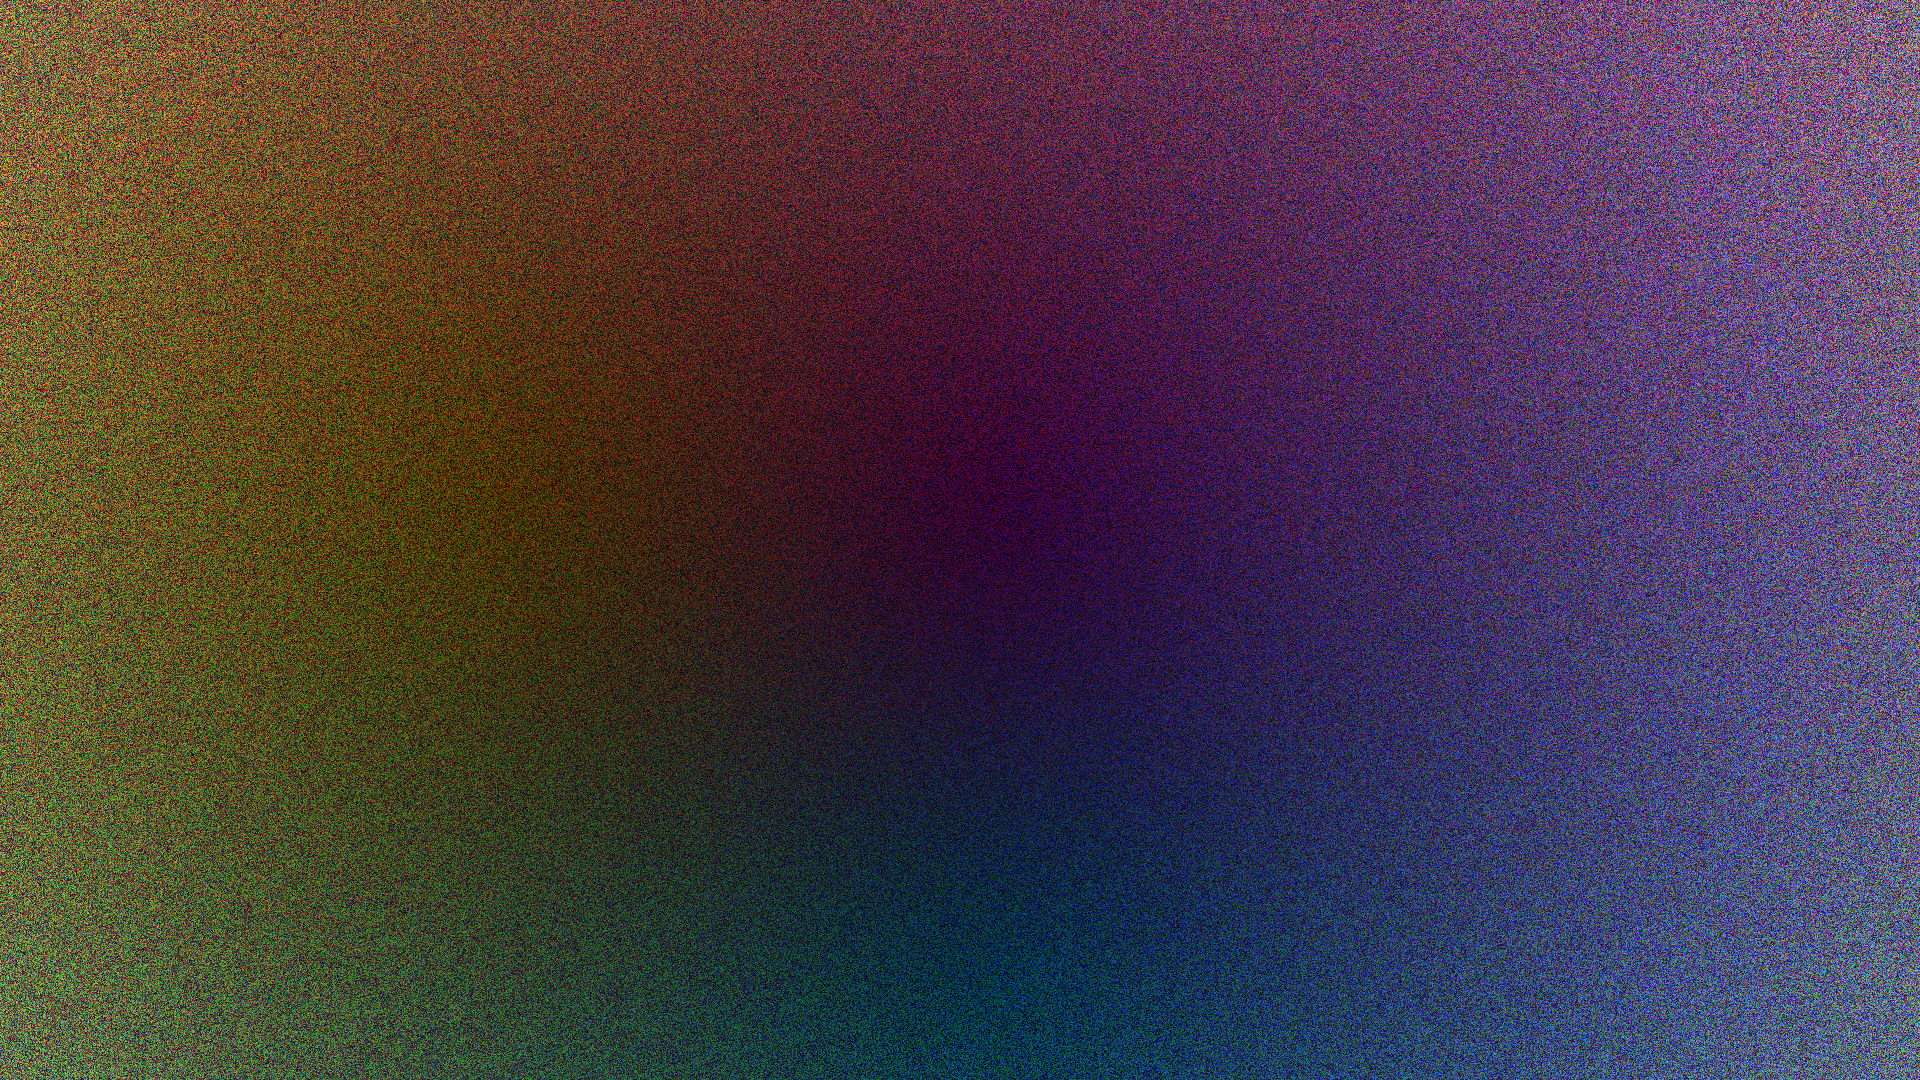 Pixels Noise Minimalism Colorful Simple Background 1920x1080